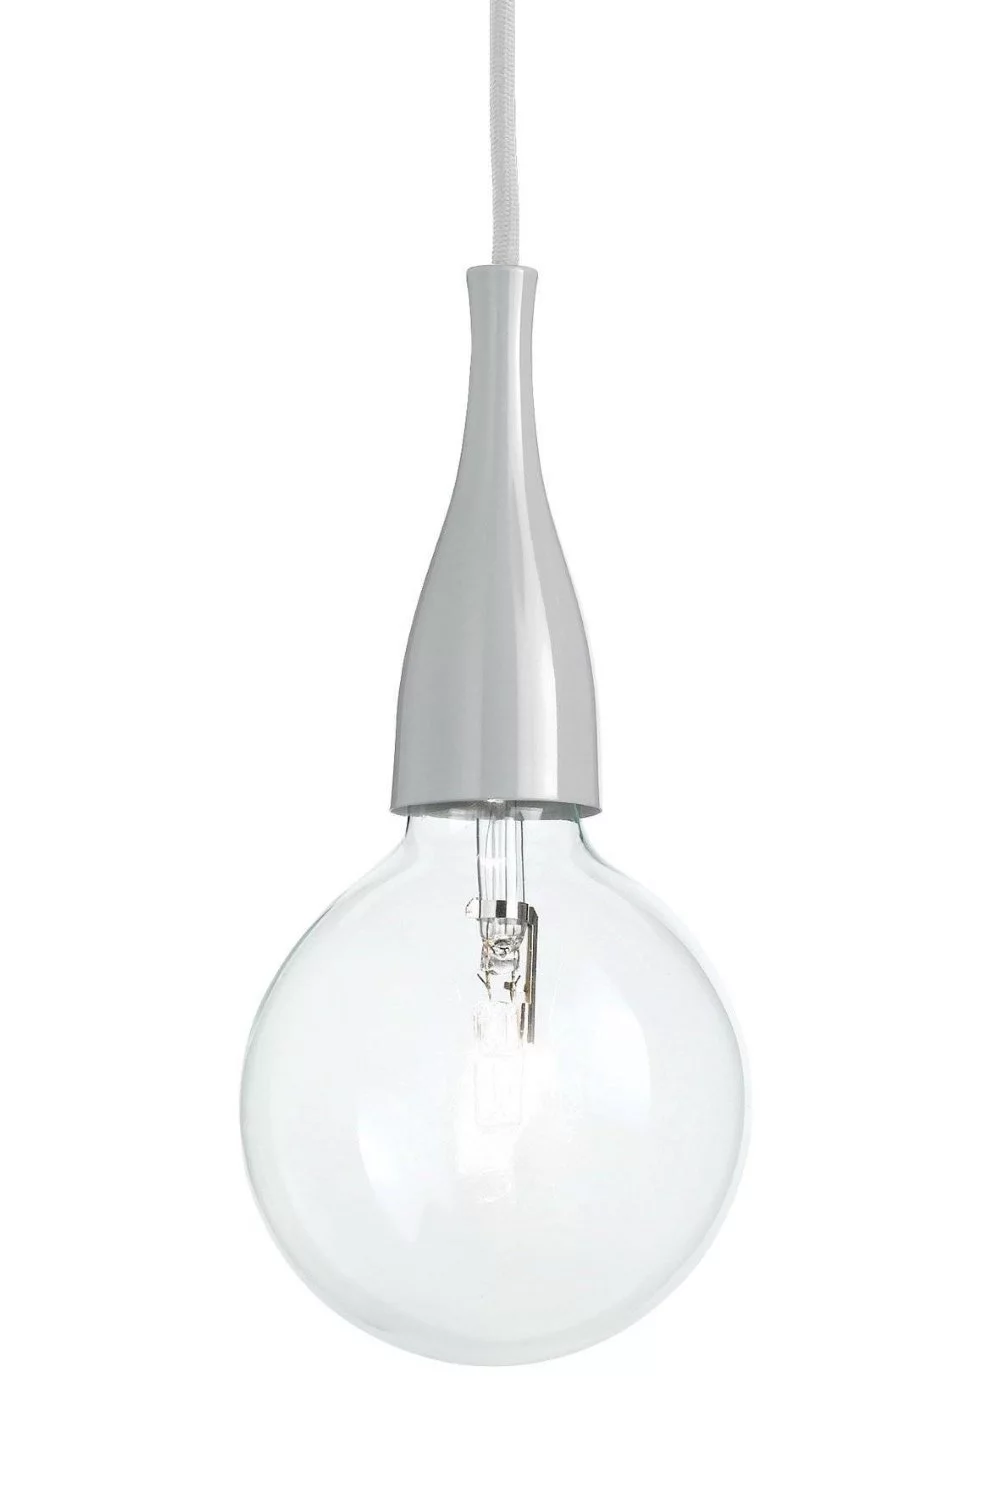   
                        Люстра IDEAL LUX  (Италия) 48708    
                         в стиле лофт.  
                        Тип источника света: светодиодные led, энергосберегающие, накаливания.                         Форма: круг.                                                                          фото 1